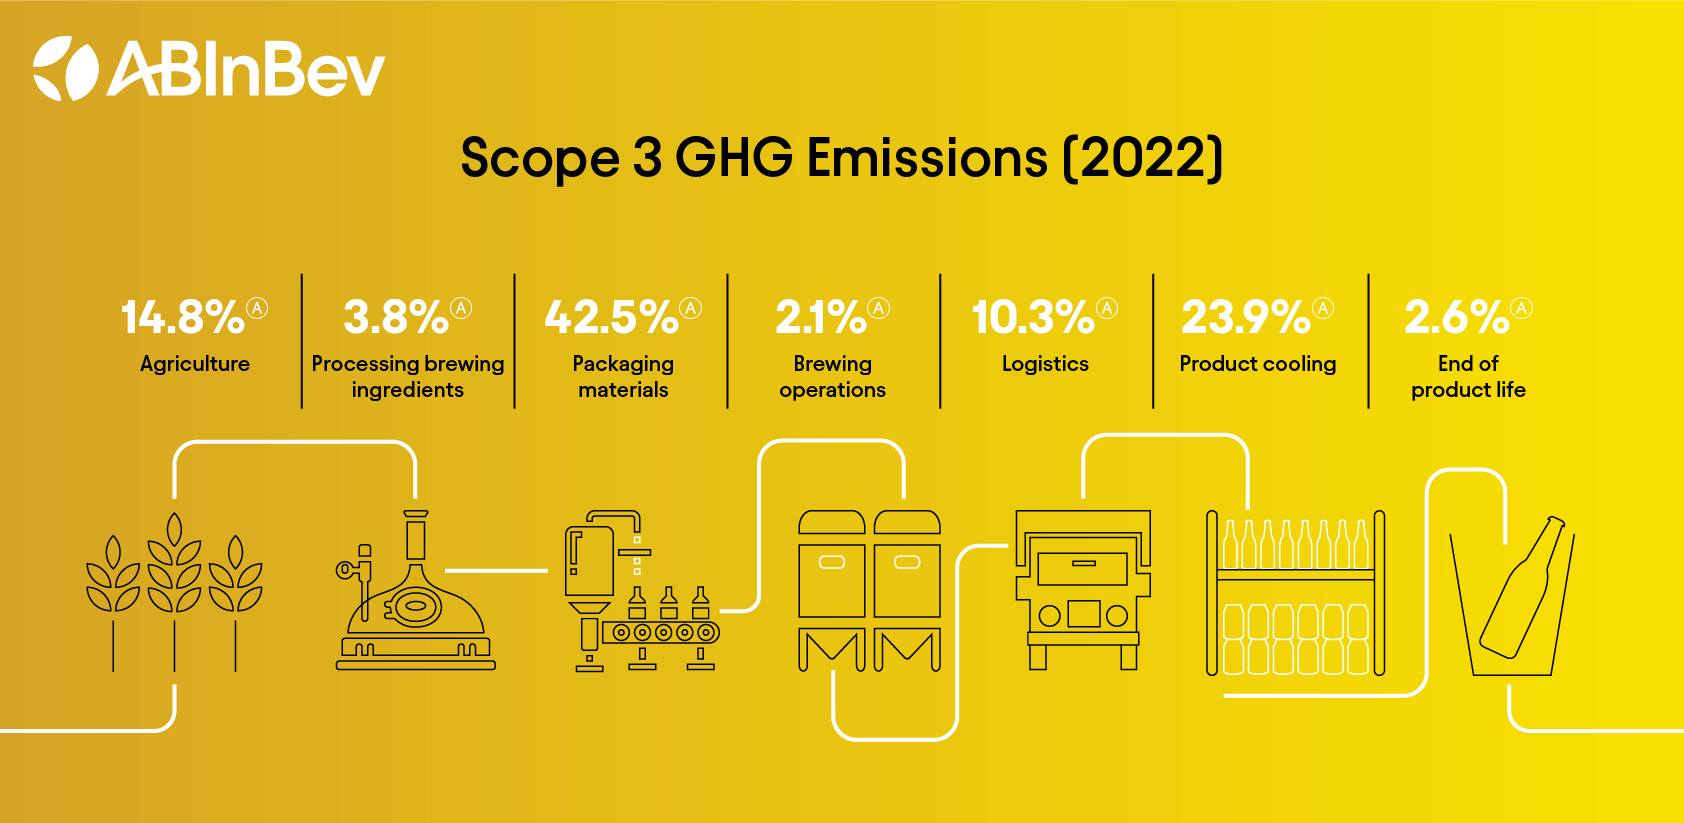 scope 3 ghg emissions image